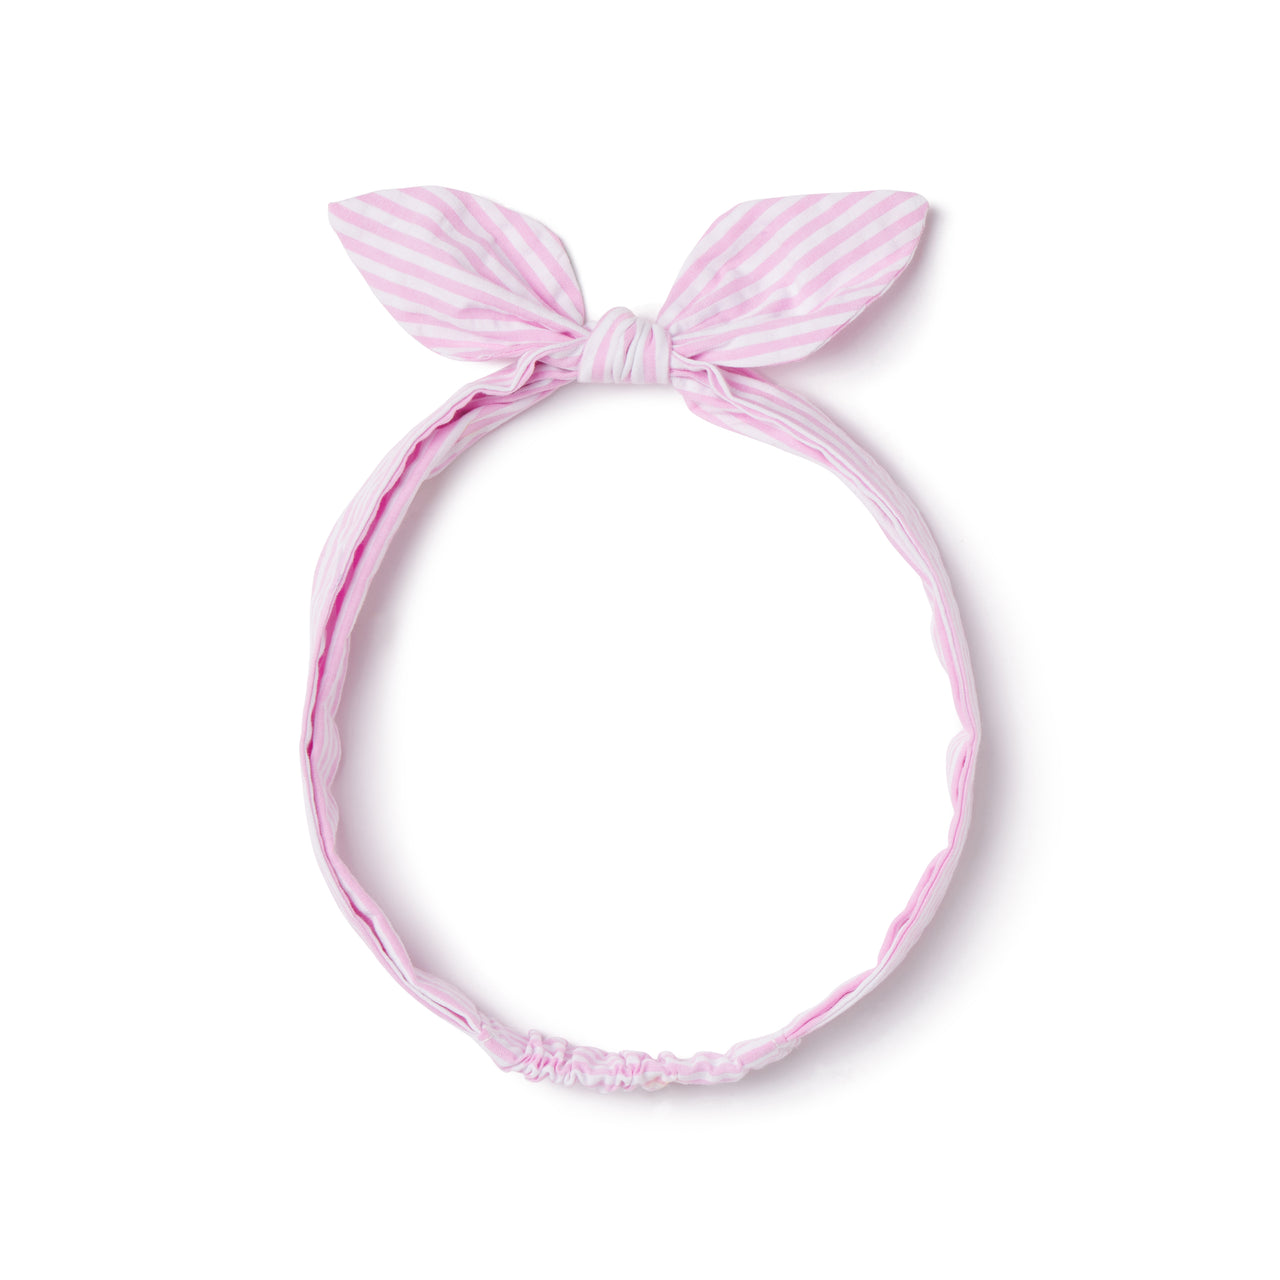 Tie Headband Pink and White Seersucker